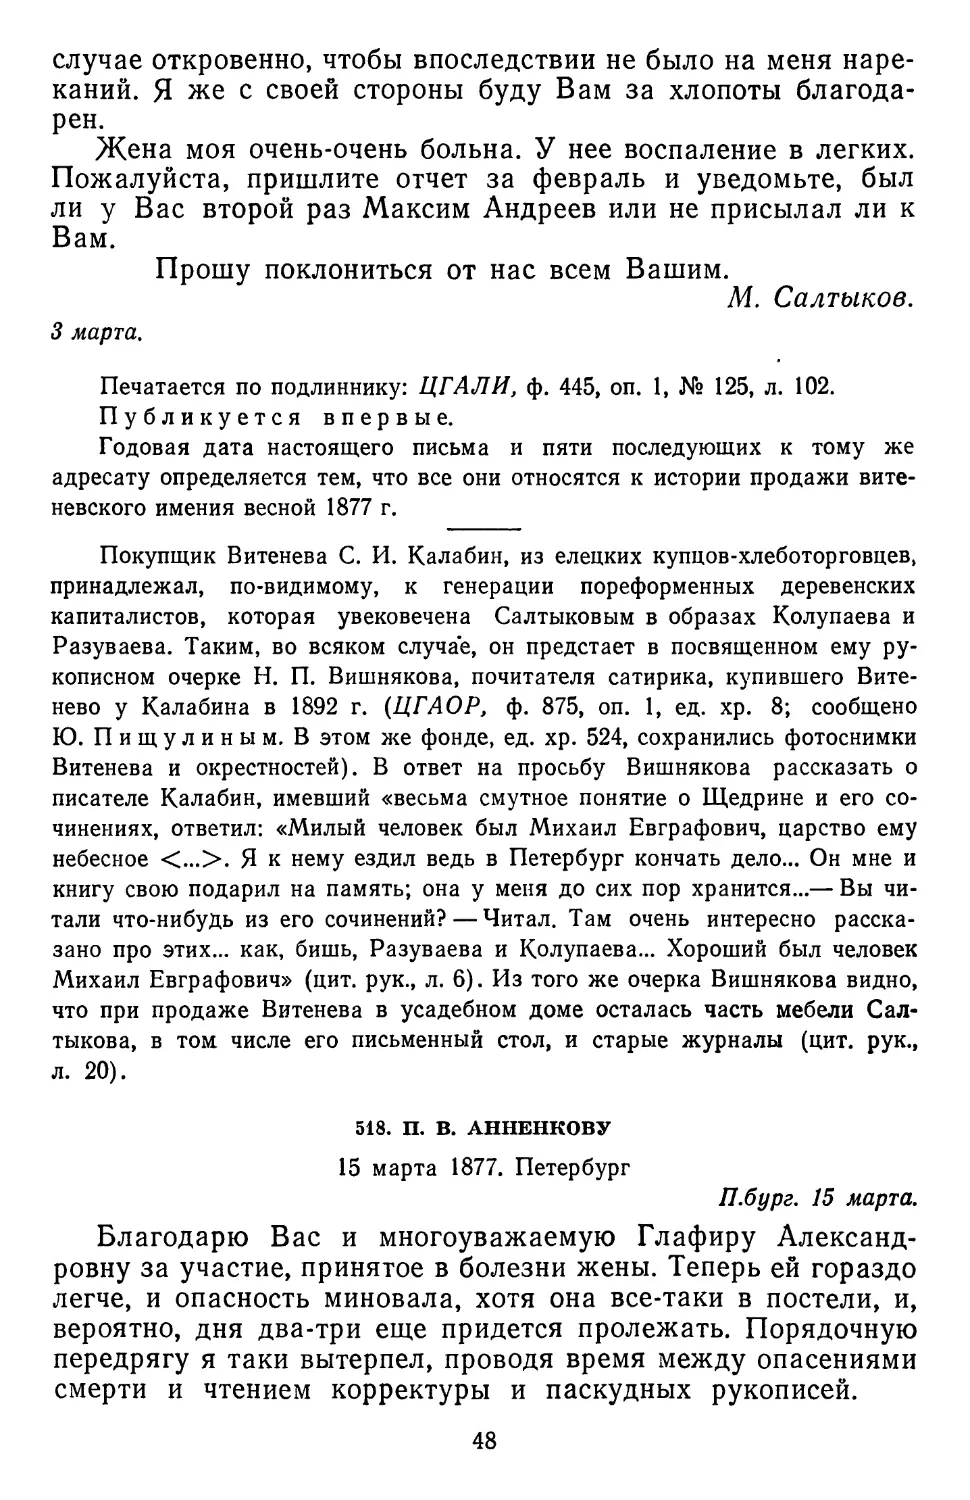 518.П.В. Анненкову. 15 марта 1877.Петербург